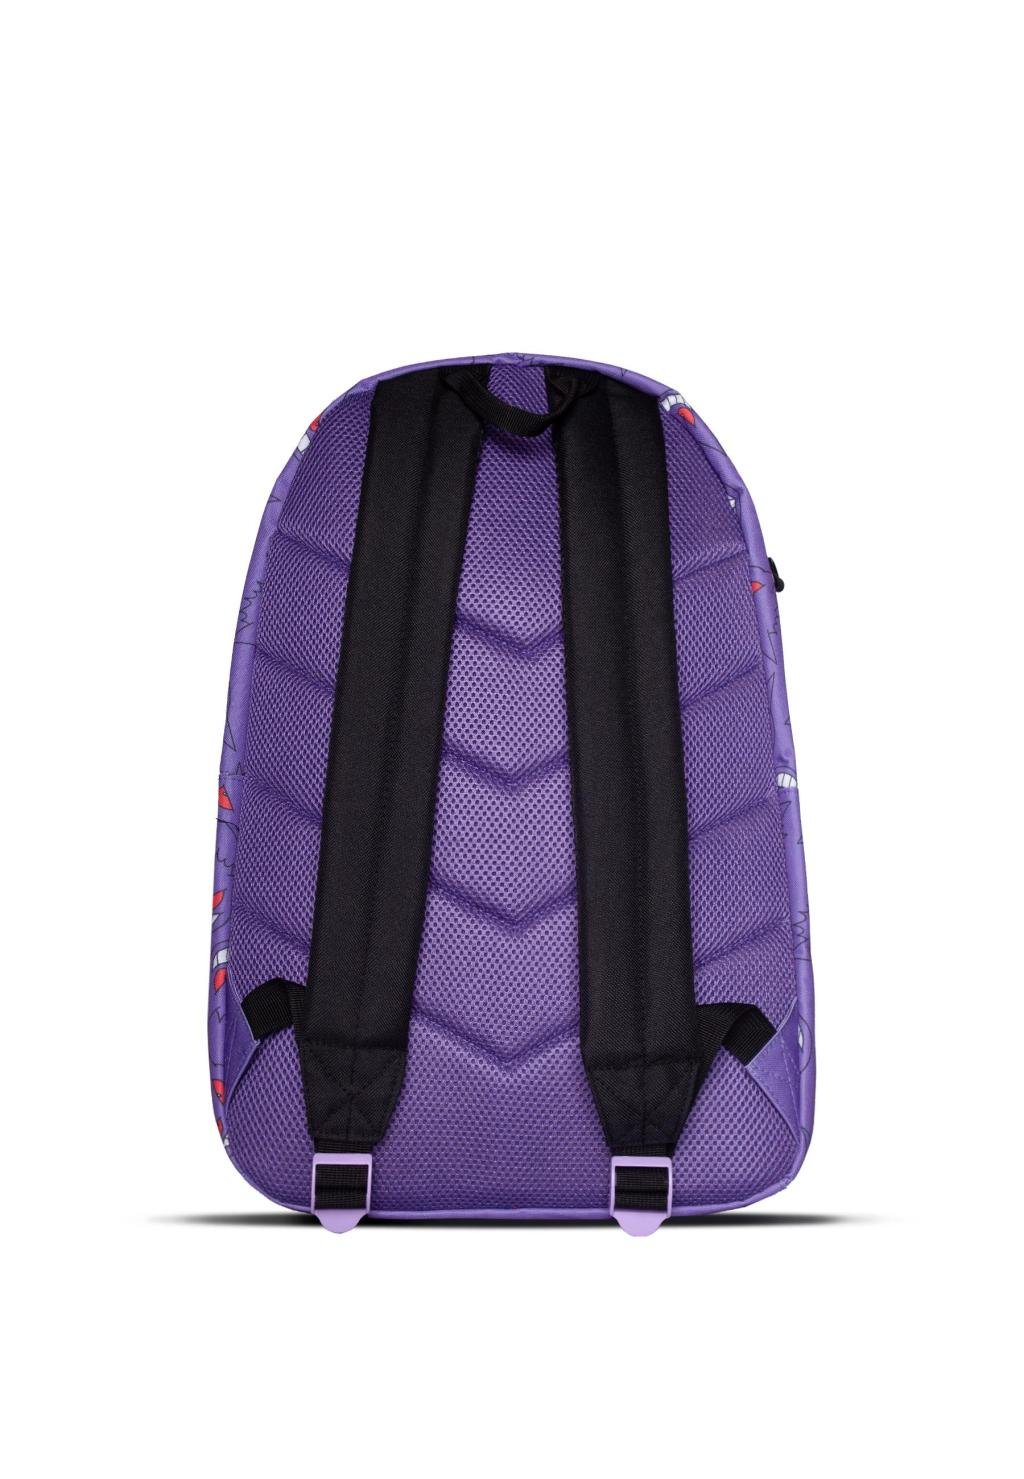 POKEMON - Gengar - Backpack